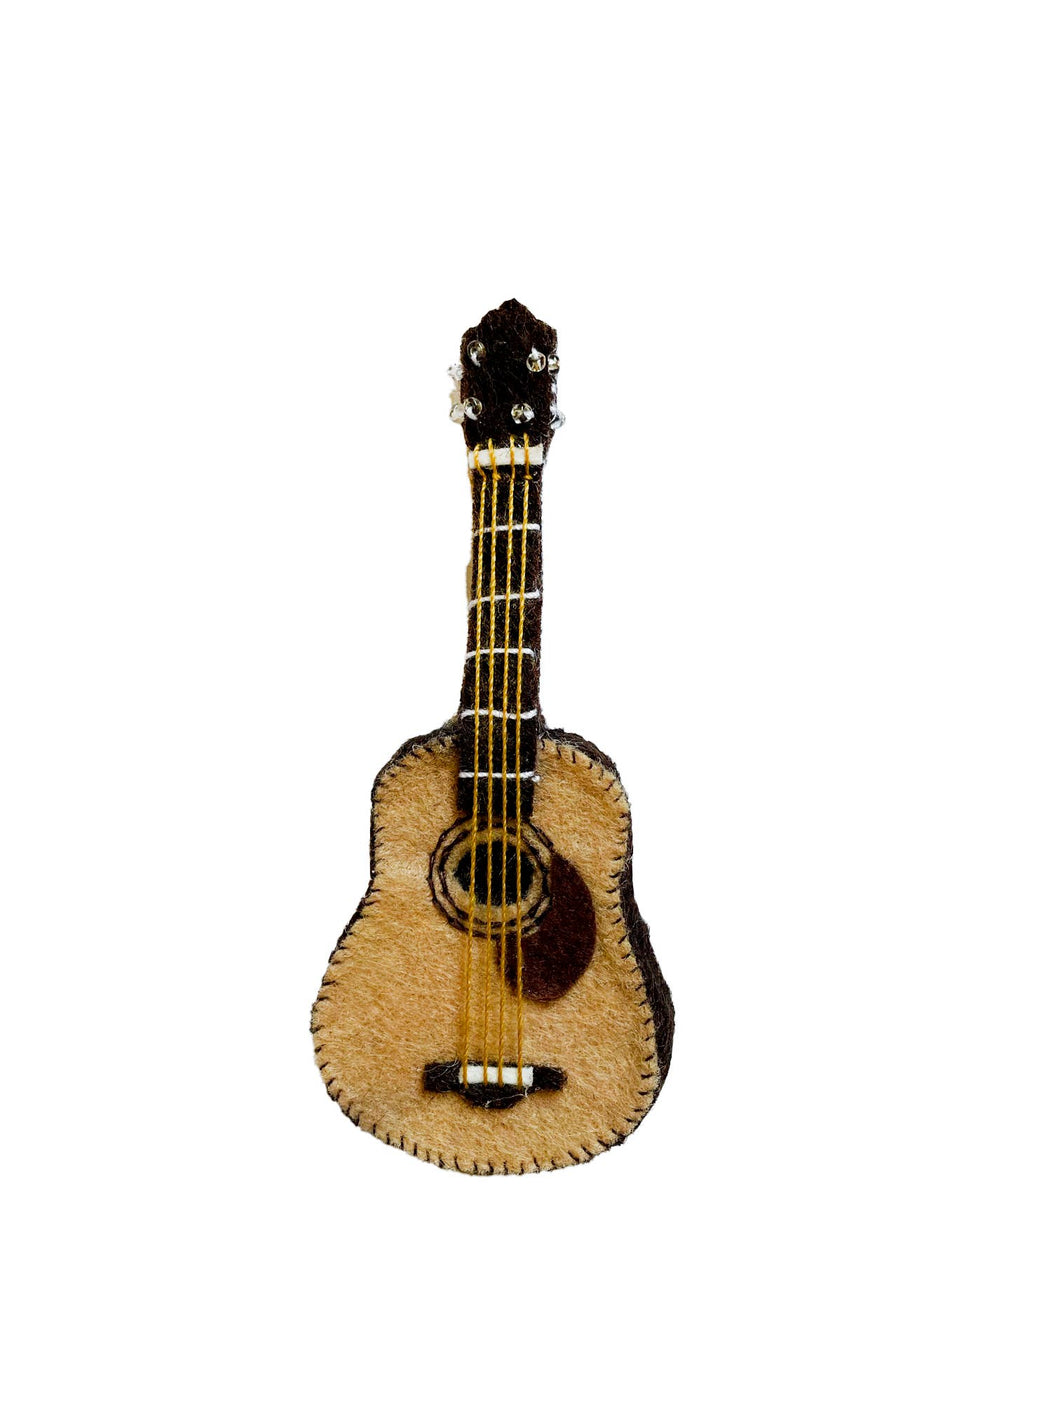 Silk Road Bazaar - Acoustic Guitar Ornament